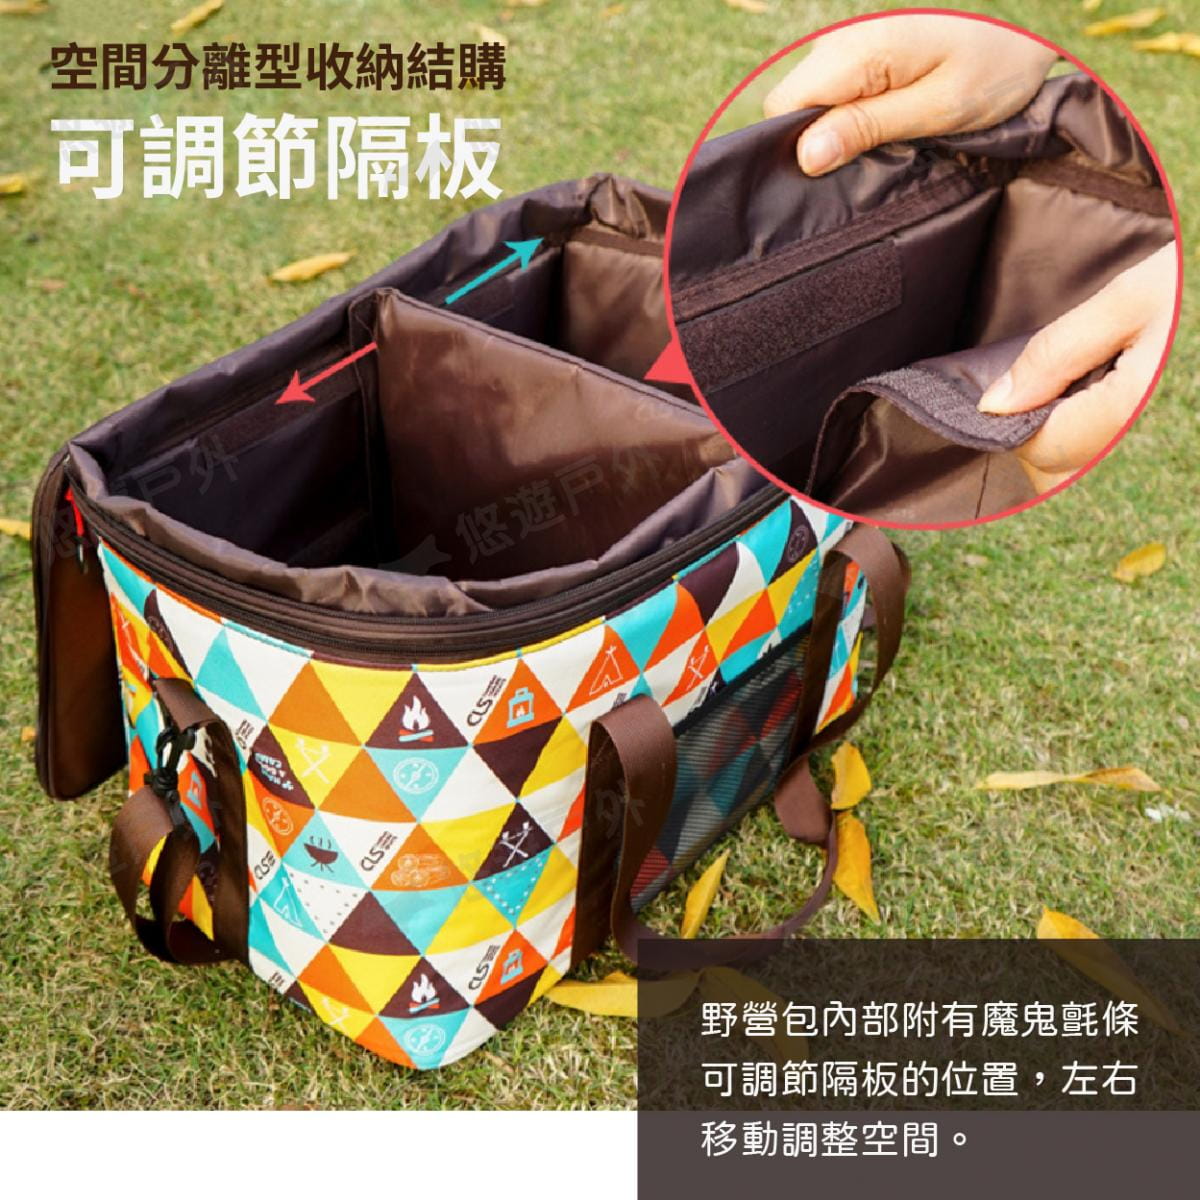 【CLS】韓國 旅行野餐包 50L大容量 野營包 可調節高度 收納包 露營手提包 自駕旅行 野餐包 5